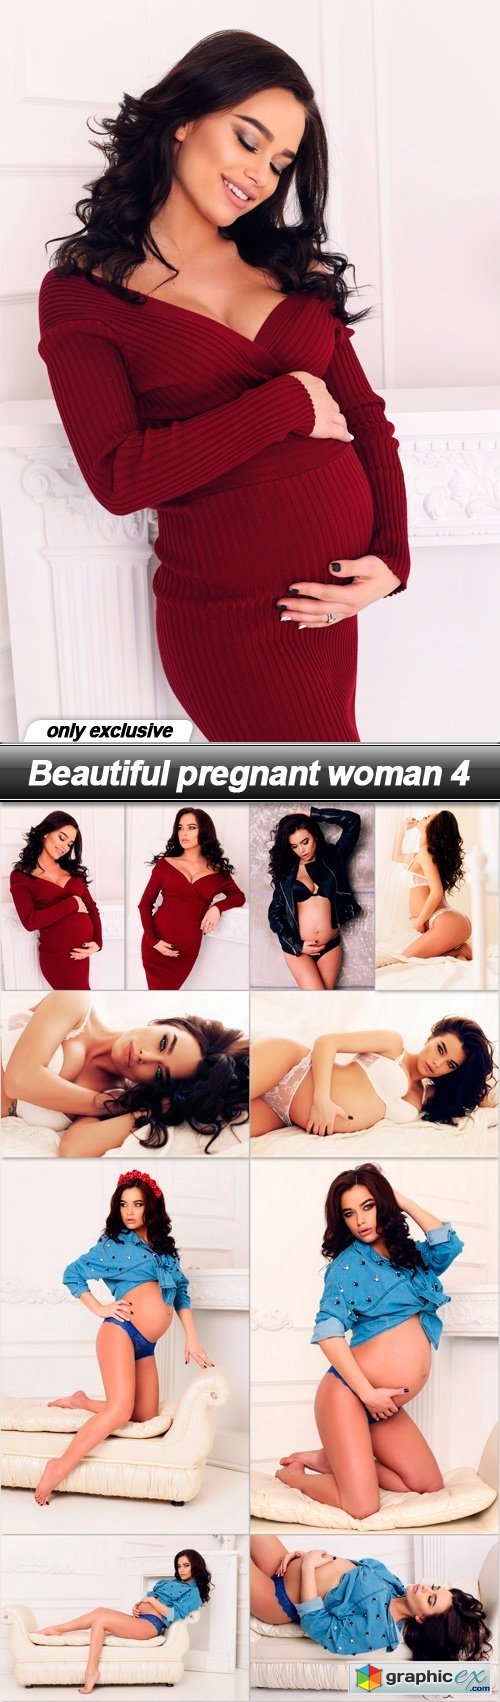 Beautiful pregnant woman 4 - 10 UHQ JPEG